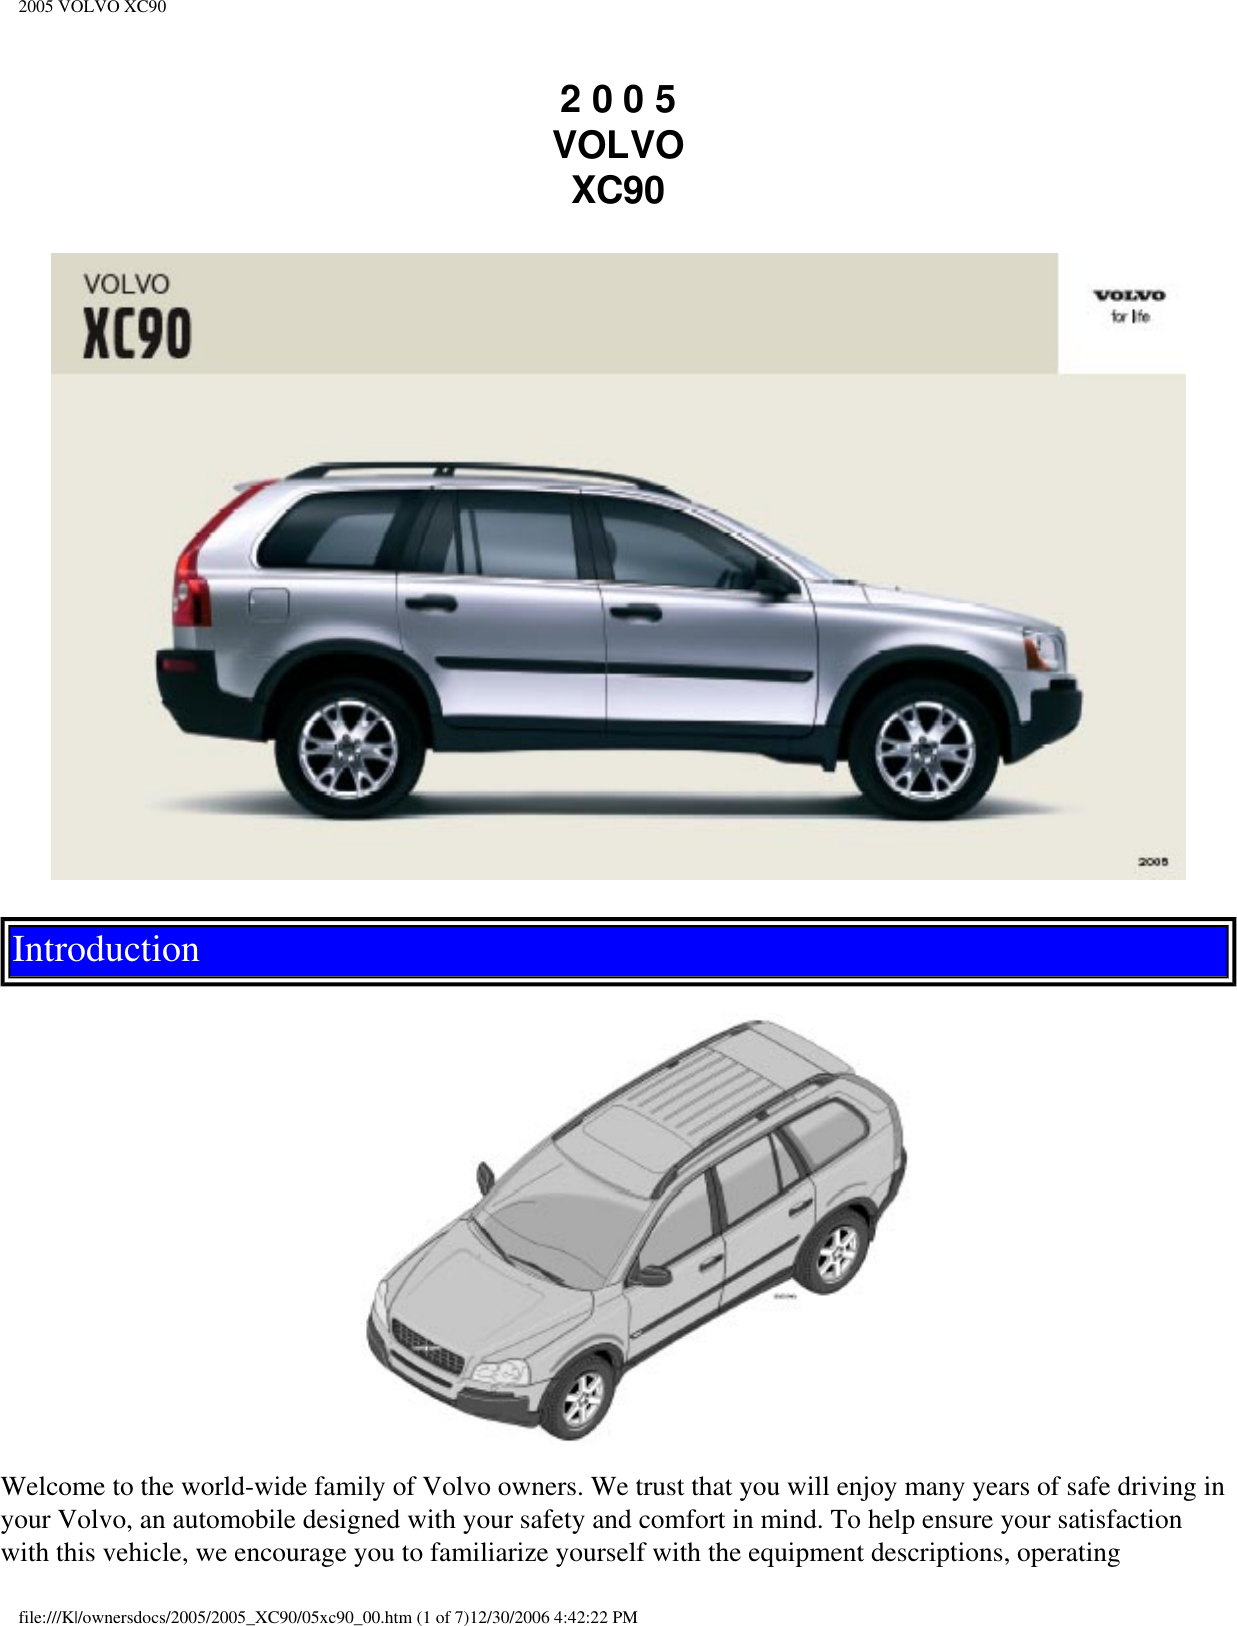 Volvo Xc90 Users Manual 2005 5017